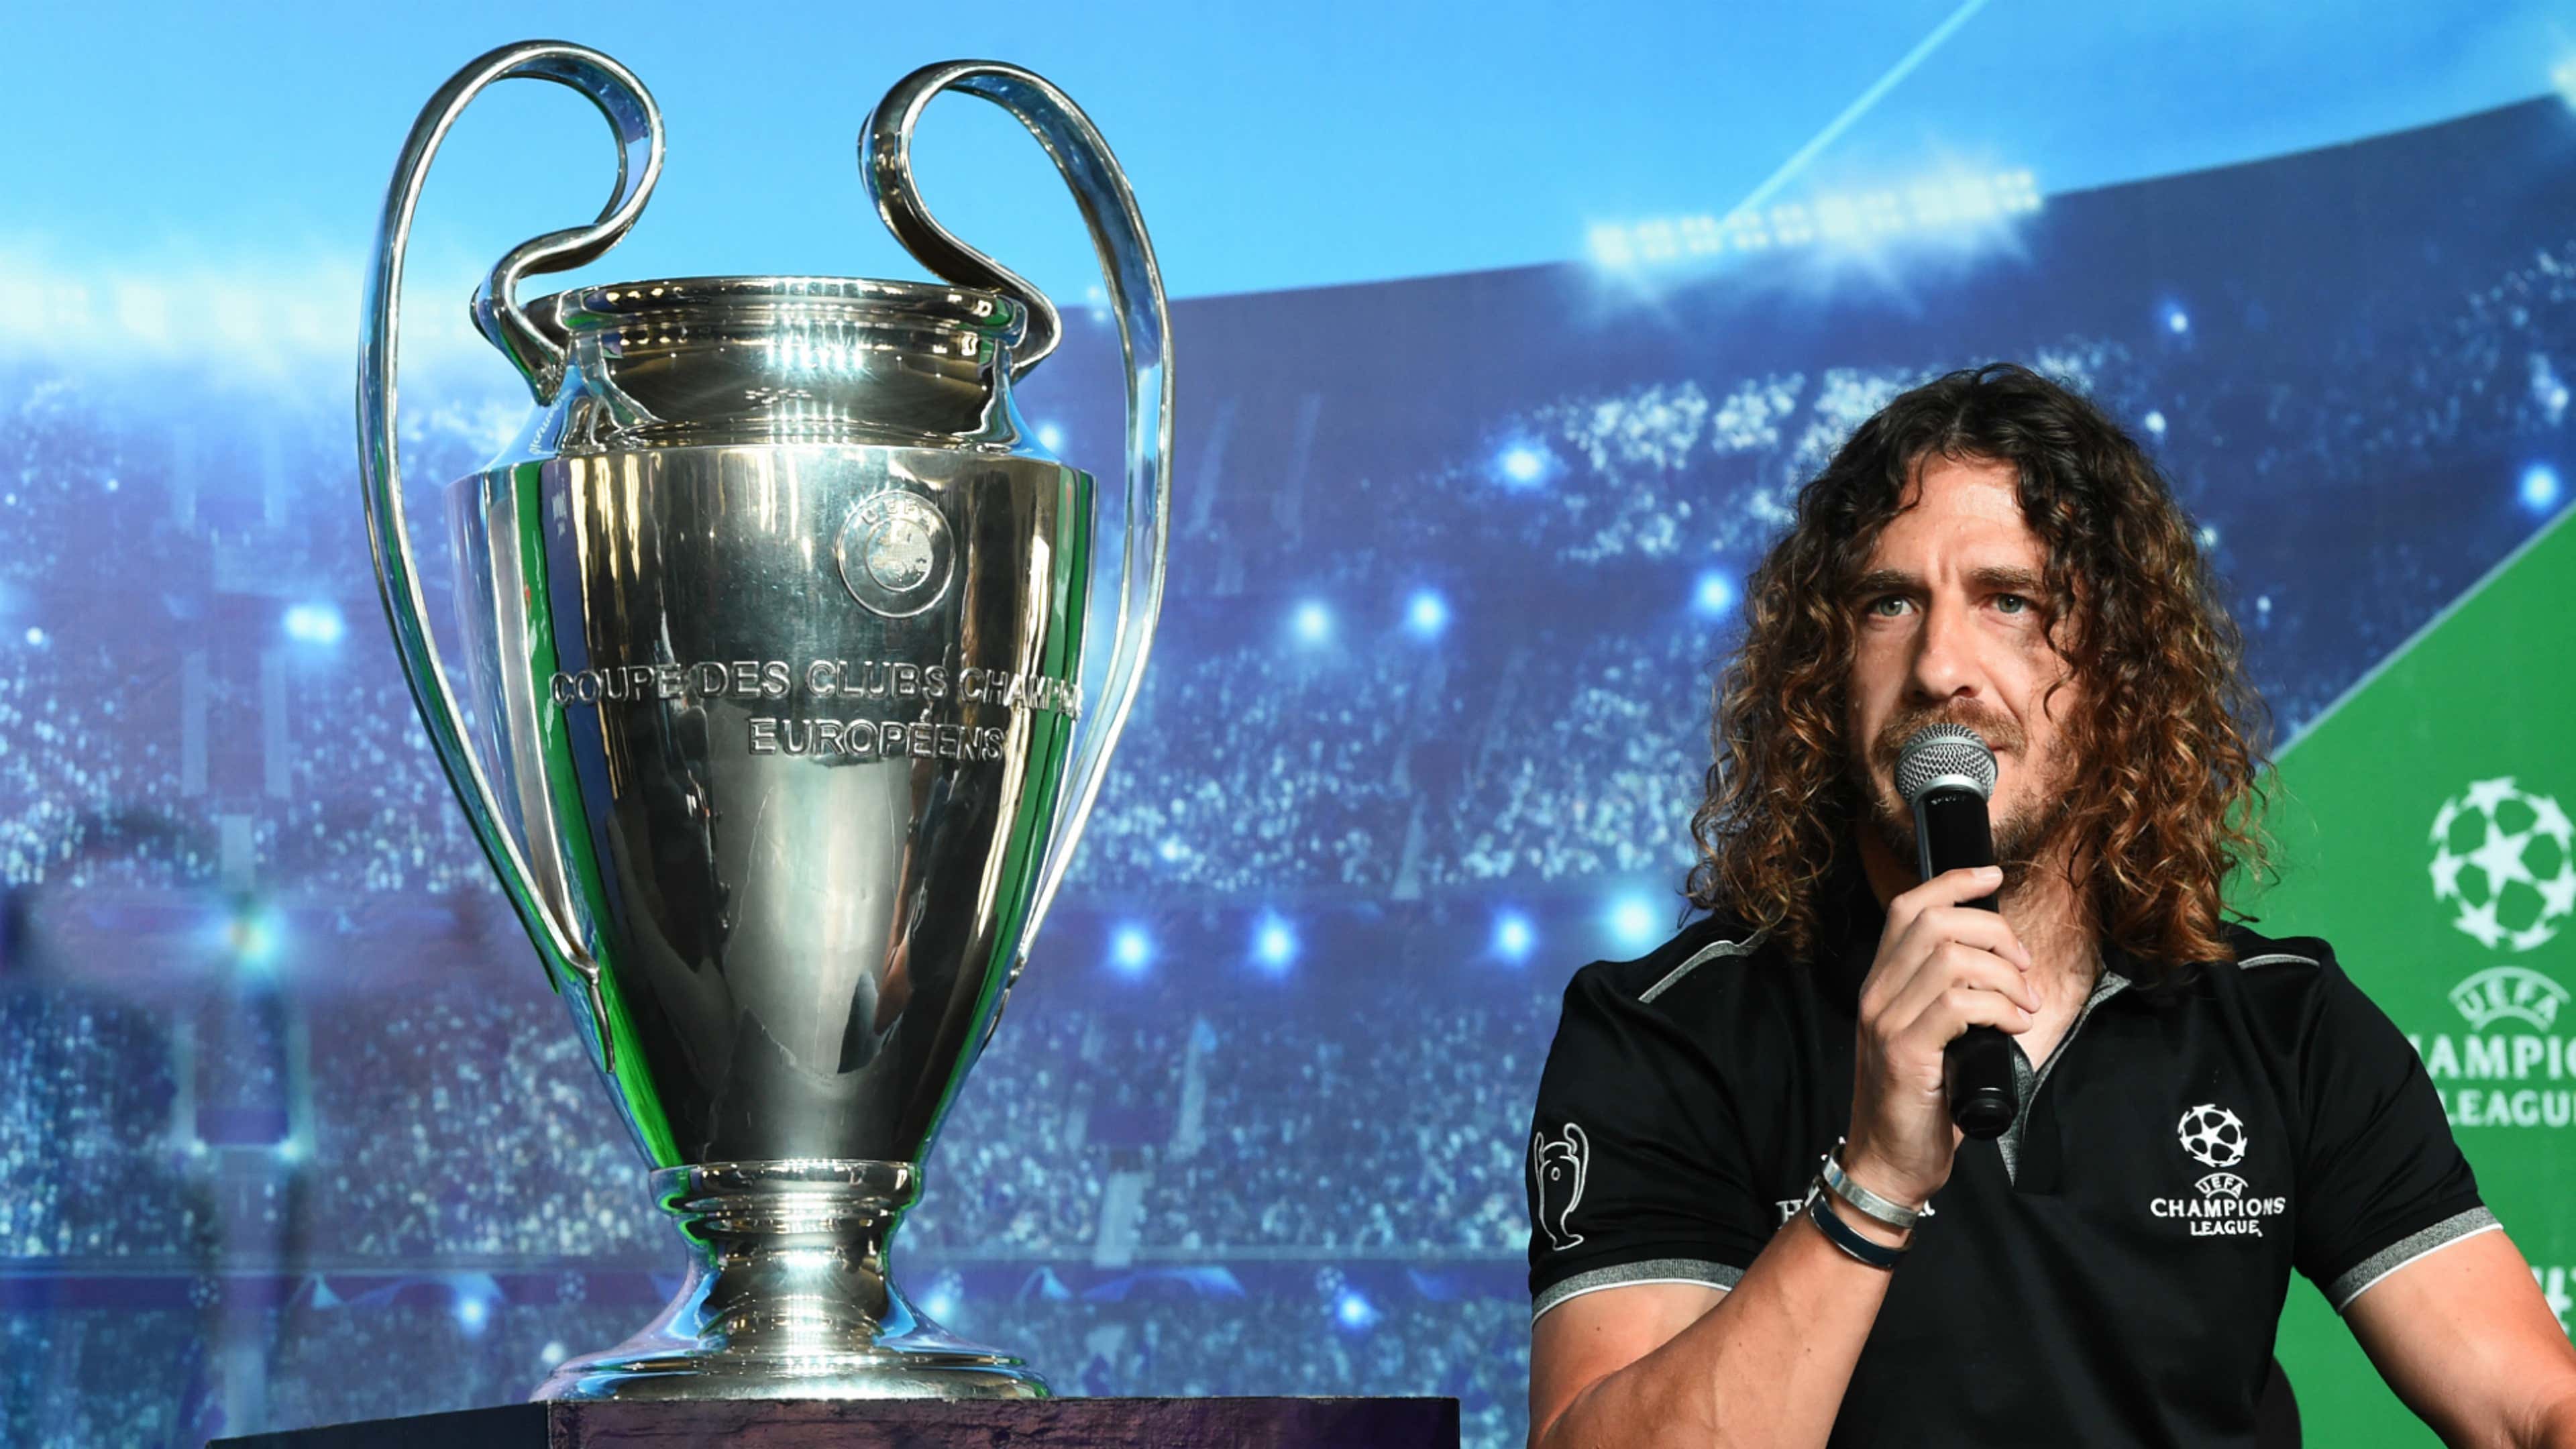 Carles Puyol, UEFA Champions League Trophy Tour Presented By Heineken, Lagos, Nigeria